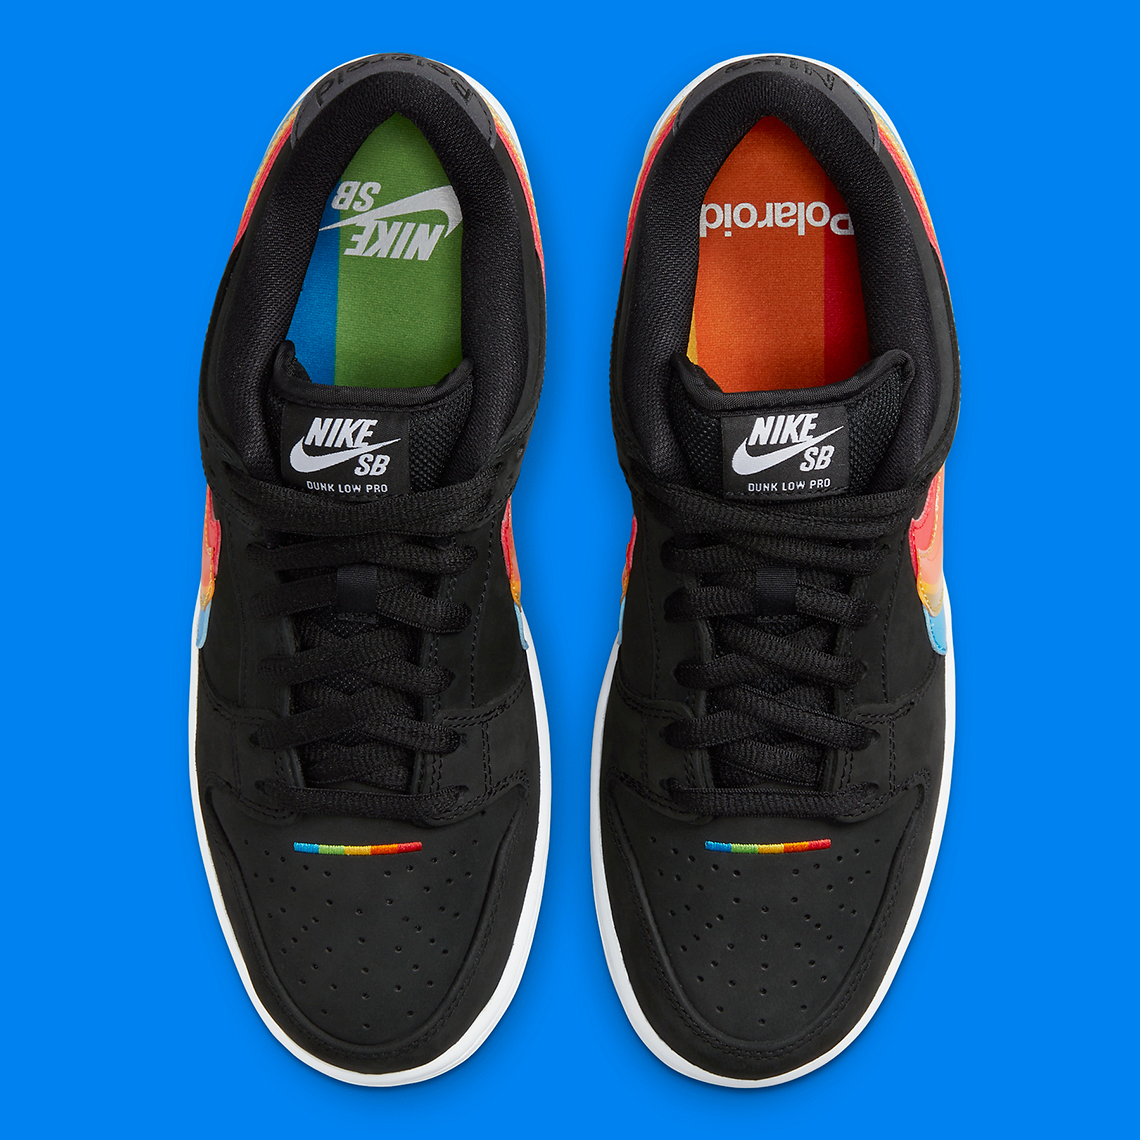 Polaroid Nike SB Dunk Low DH7722-001 Release Date | SneakerNews.com